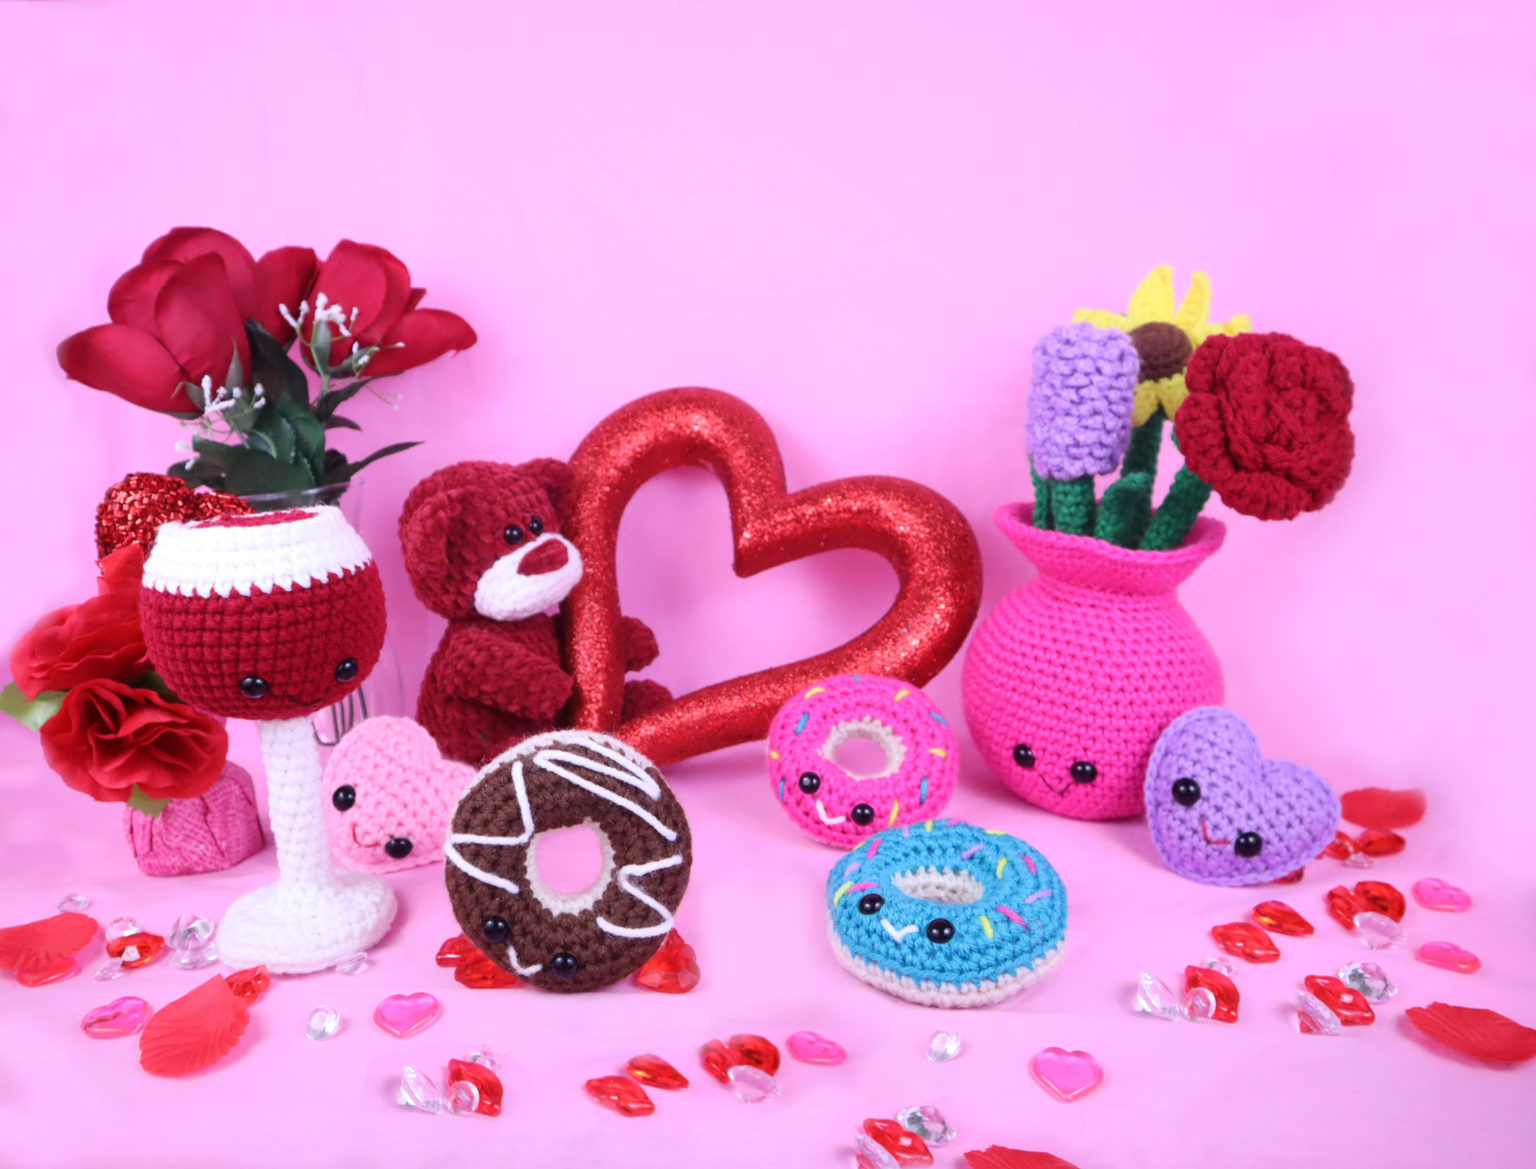 Free Valentine's Day Amigurumi Bundle! 5 New Adorable Crochet Patterns